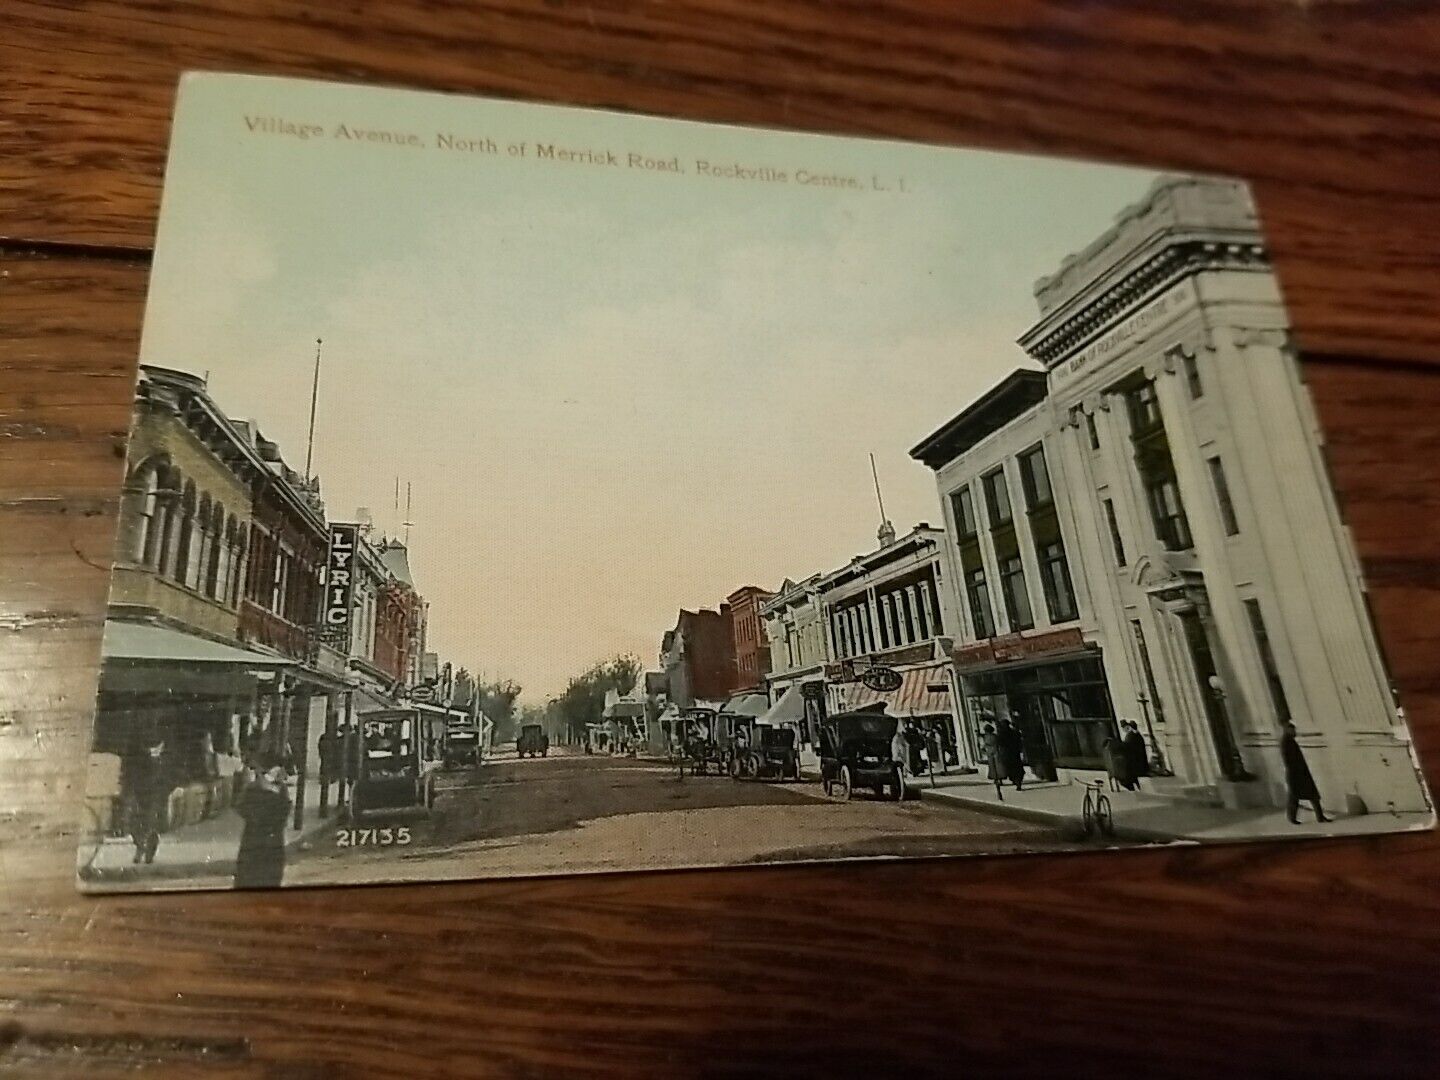 1913 Hotel & Stores Village Ave. Rockville Centre LI NY post card